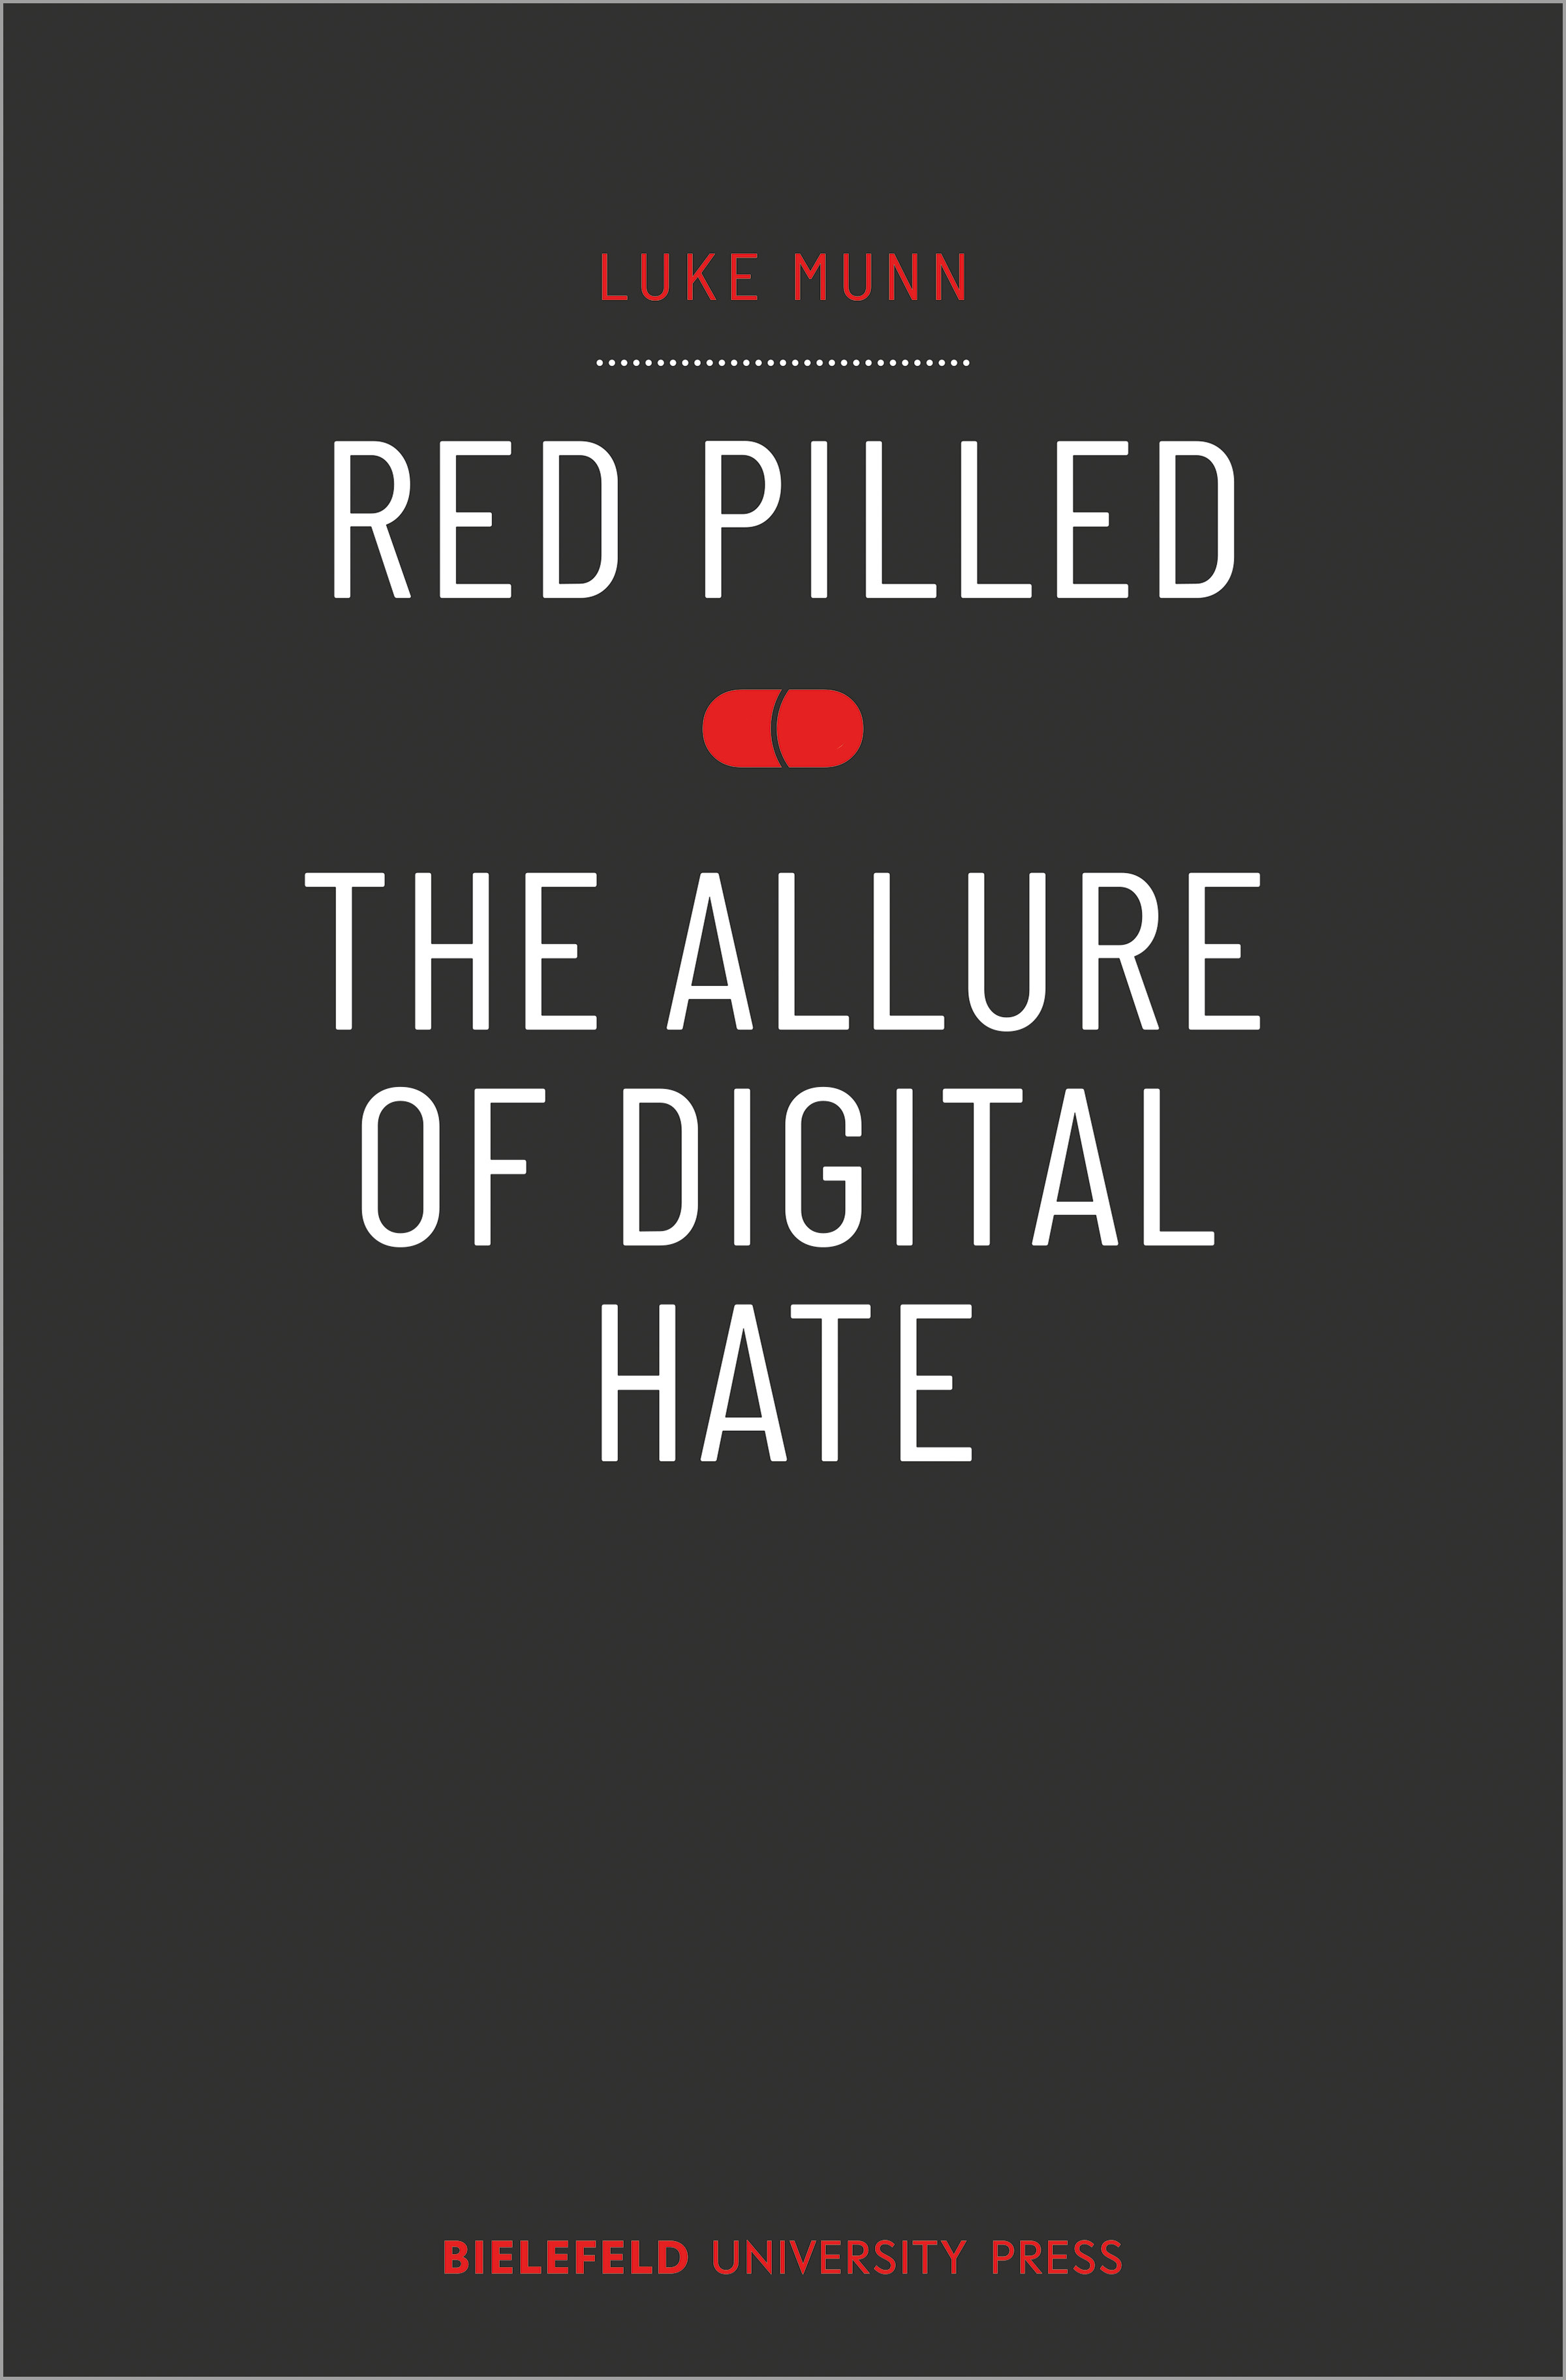 Red Pilled (Paperback, Bielefeld University Press)